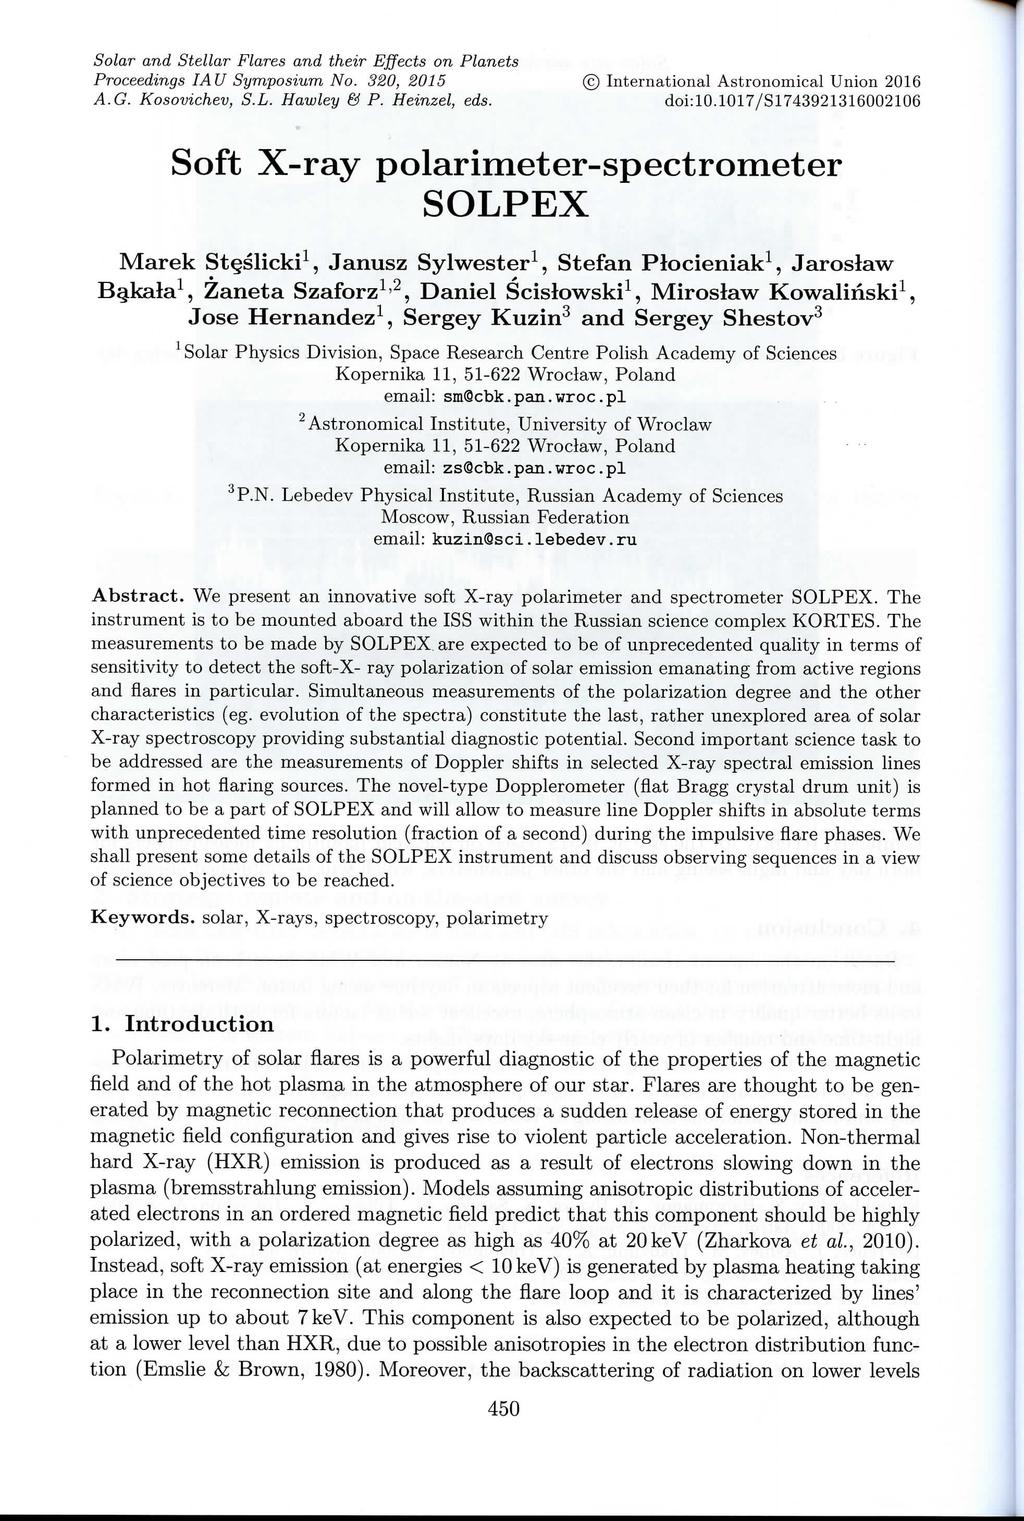 Solar and Stellar Flares and their Effects on Planets Proceedings IAU Symposium No. 320, 2015 International Astronomical Union 2016 A.G. Kosovichev, S.L. Hawley & P. Heinzel, eds. doi:10.